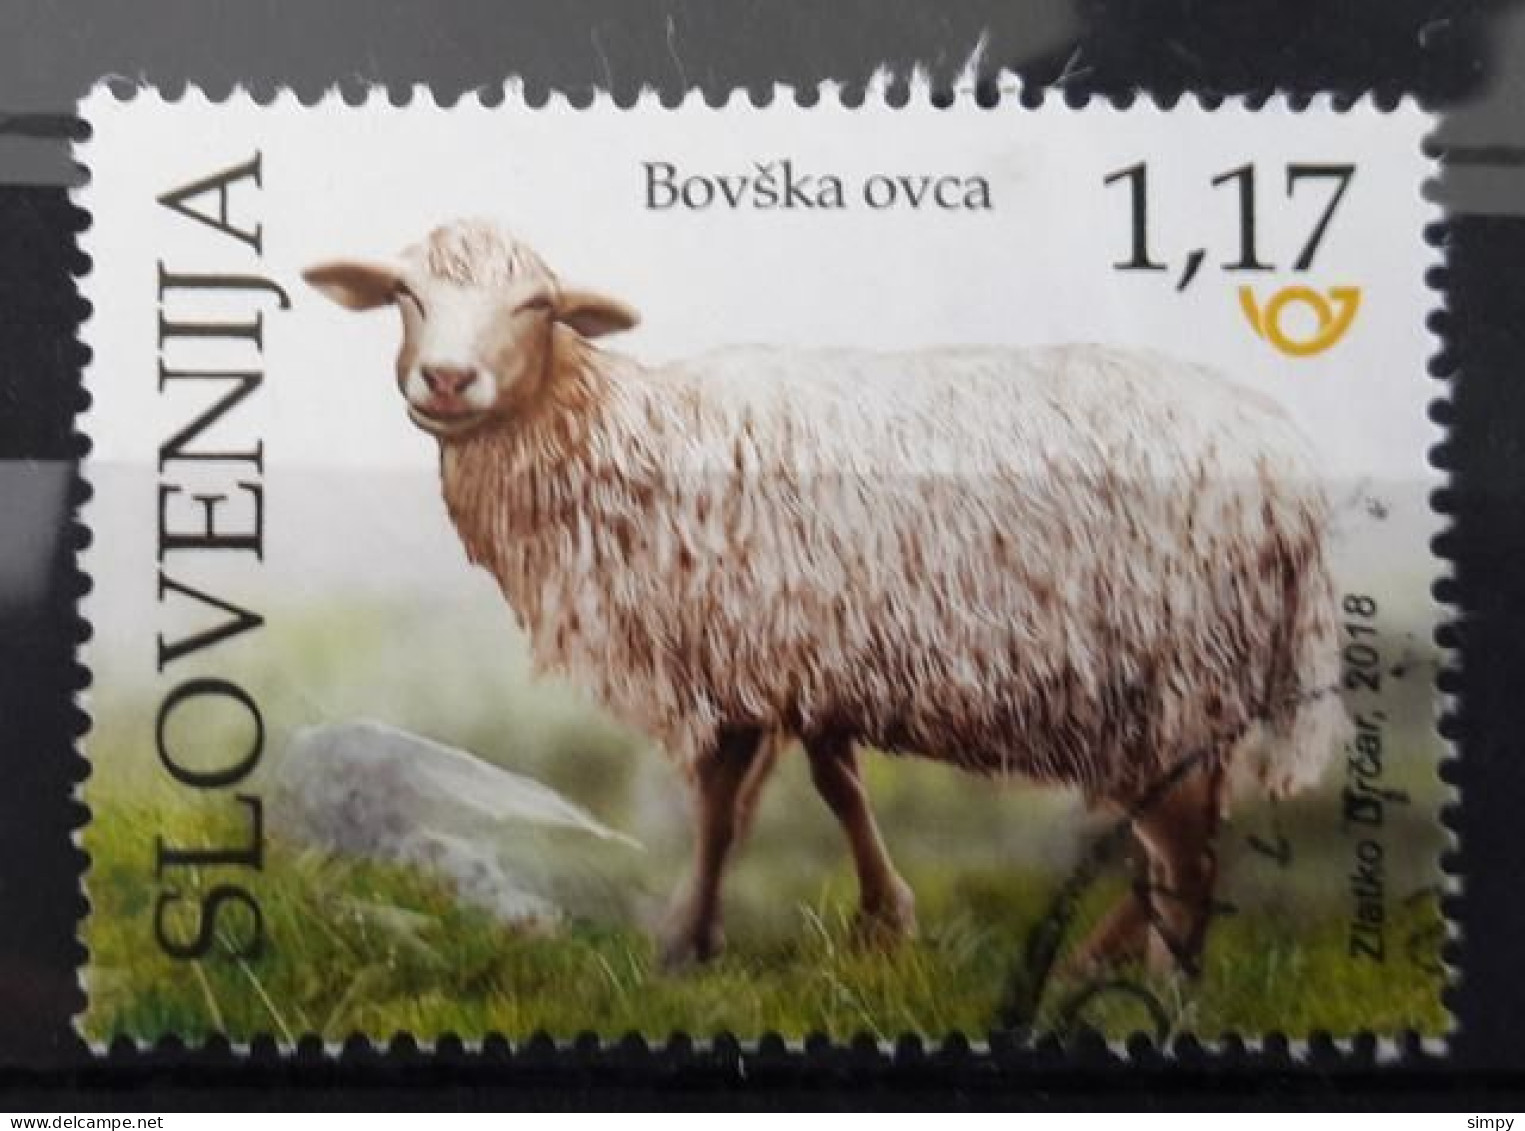 SLOVENIA 2018 Sheep Used Stamp - Eslovenia